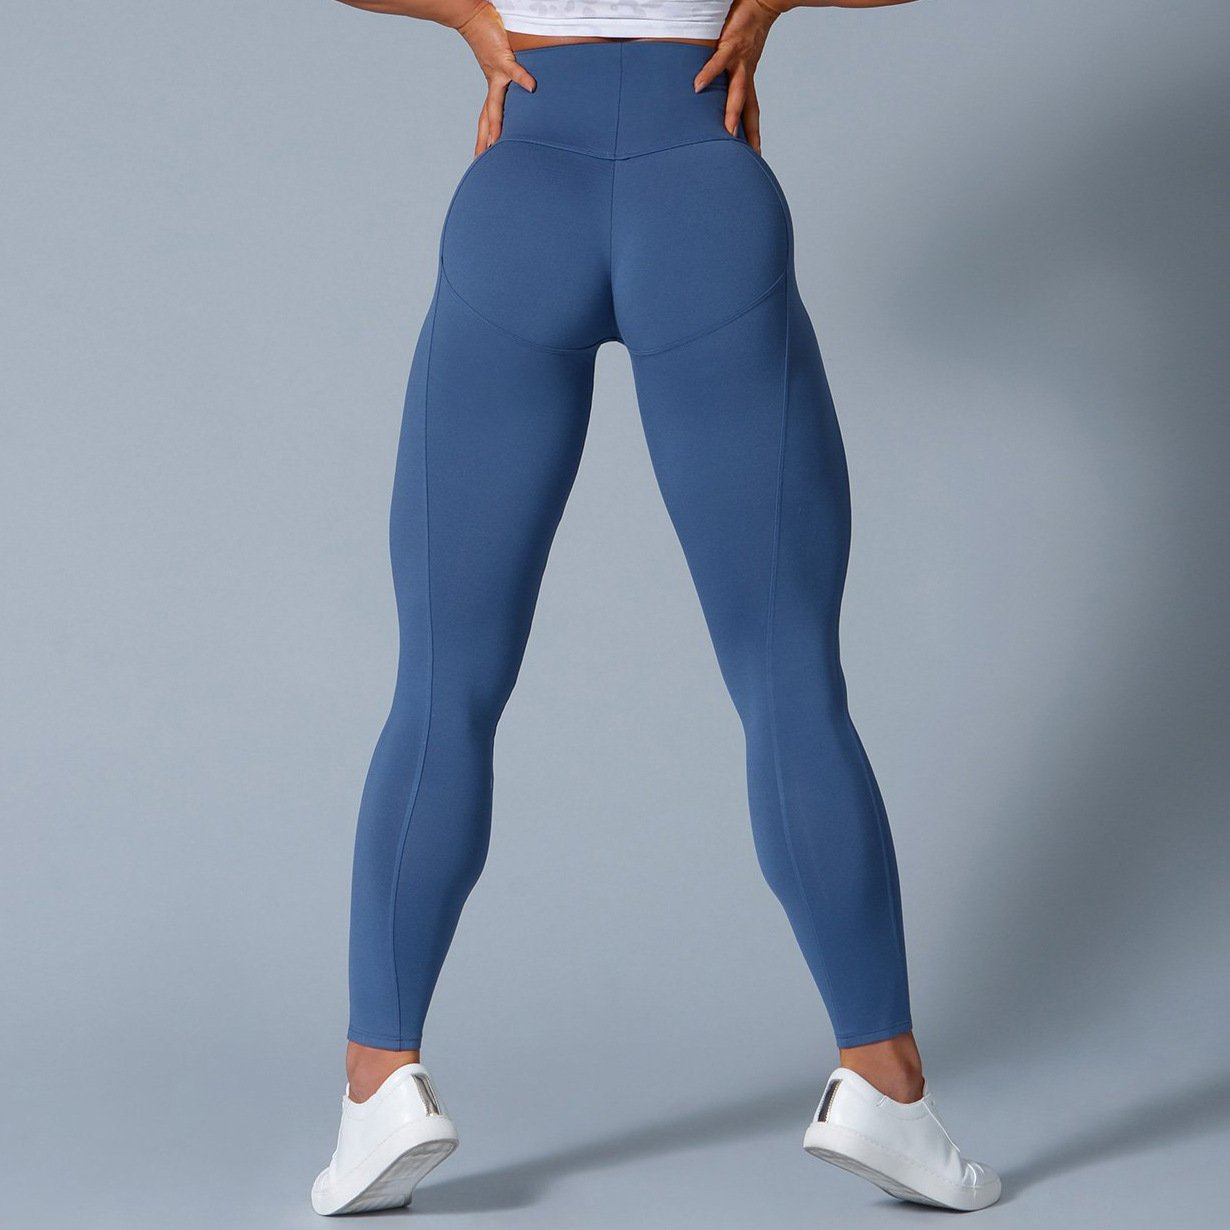 Sexy High Waist Women Running Sports Yoga Leggings-Activewear-Navy Blue-S-Free Shipping at meselling99